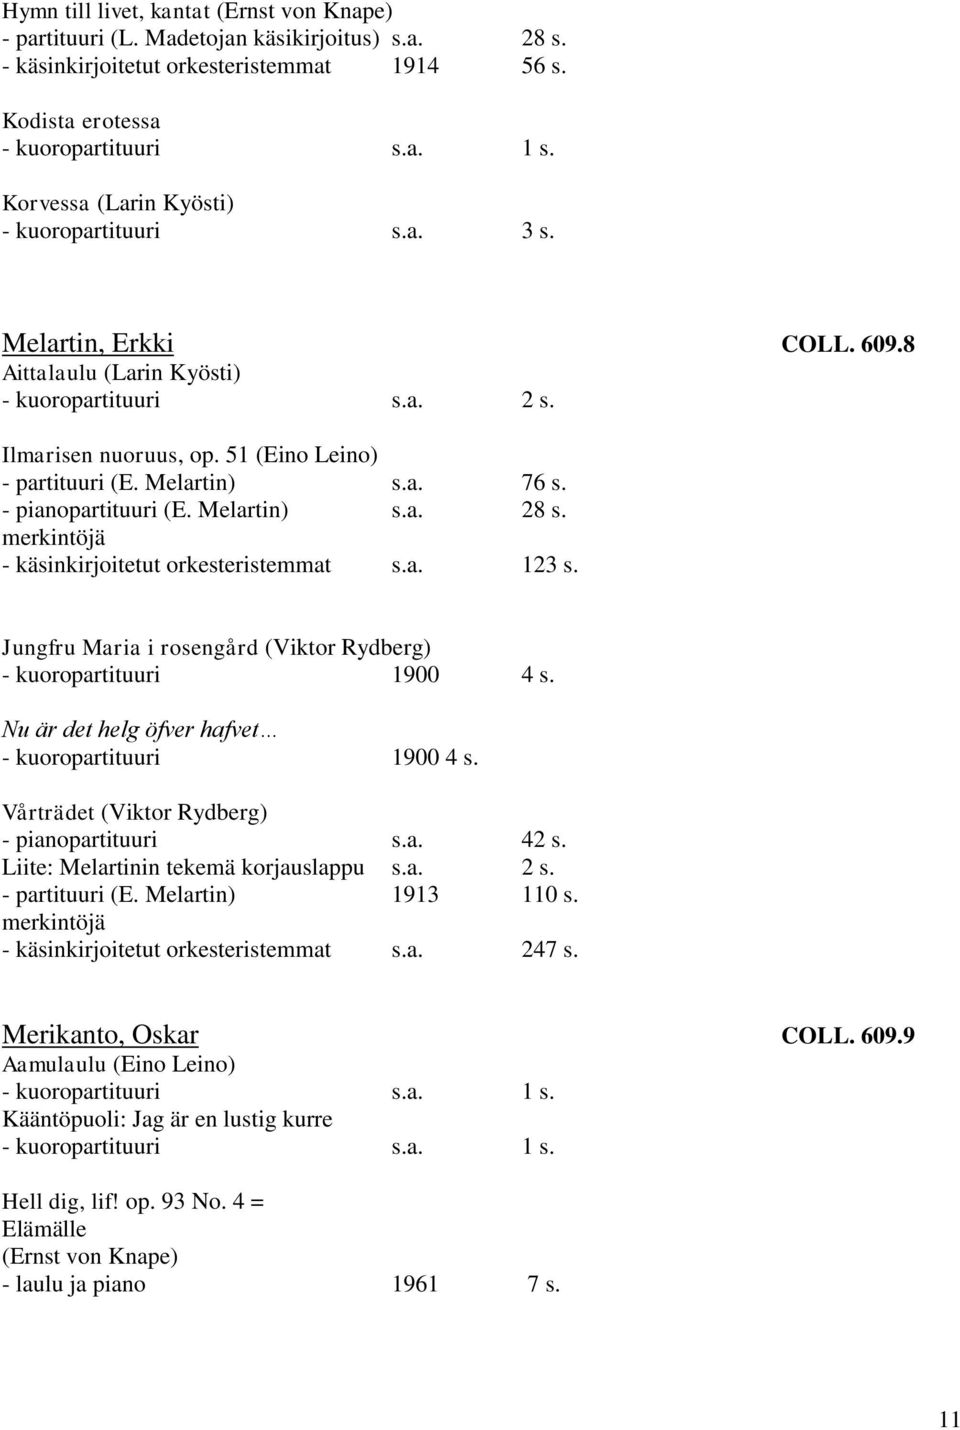 Melartin) s.a. 28 s. merkintöjä - käsinkirjoitetut orkesteristemmat s.a. 123 s. Jungfru Maria i rosengård (Viktor Rydberg) - kuoropartituuri 1900 4 s.